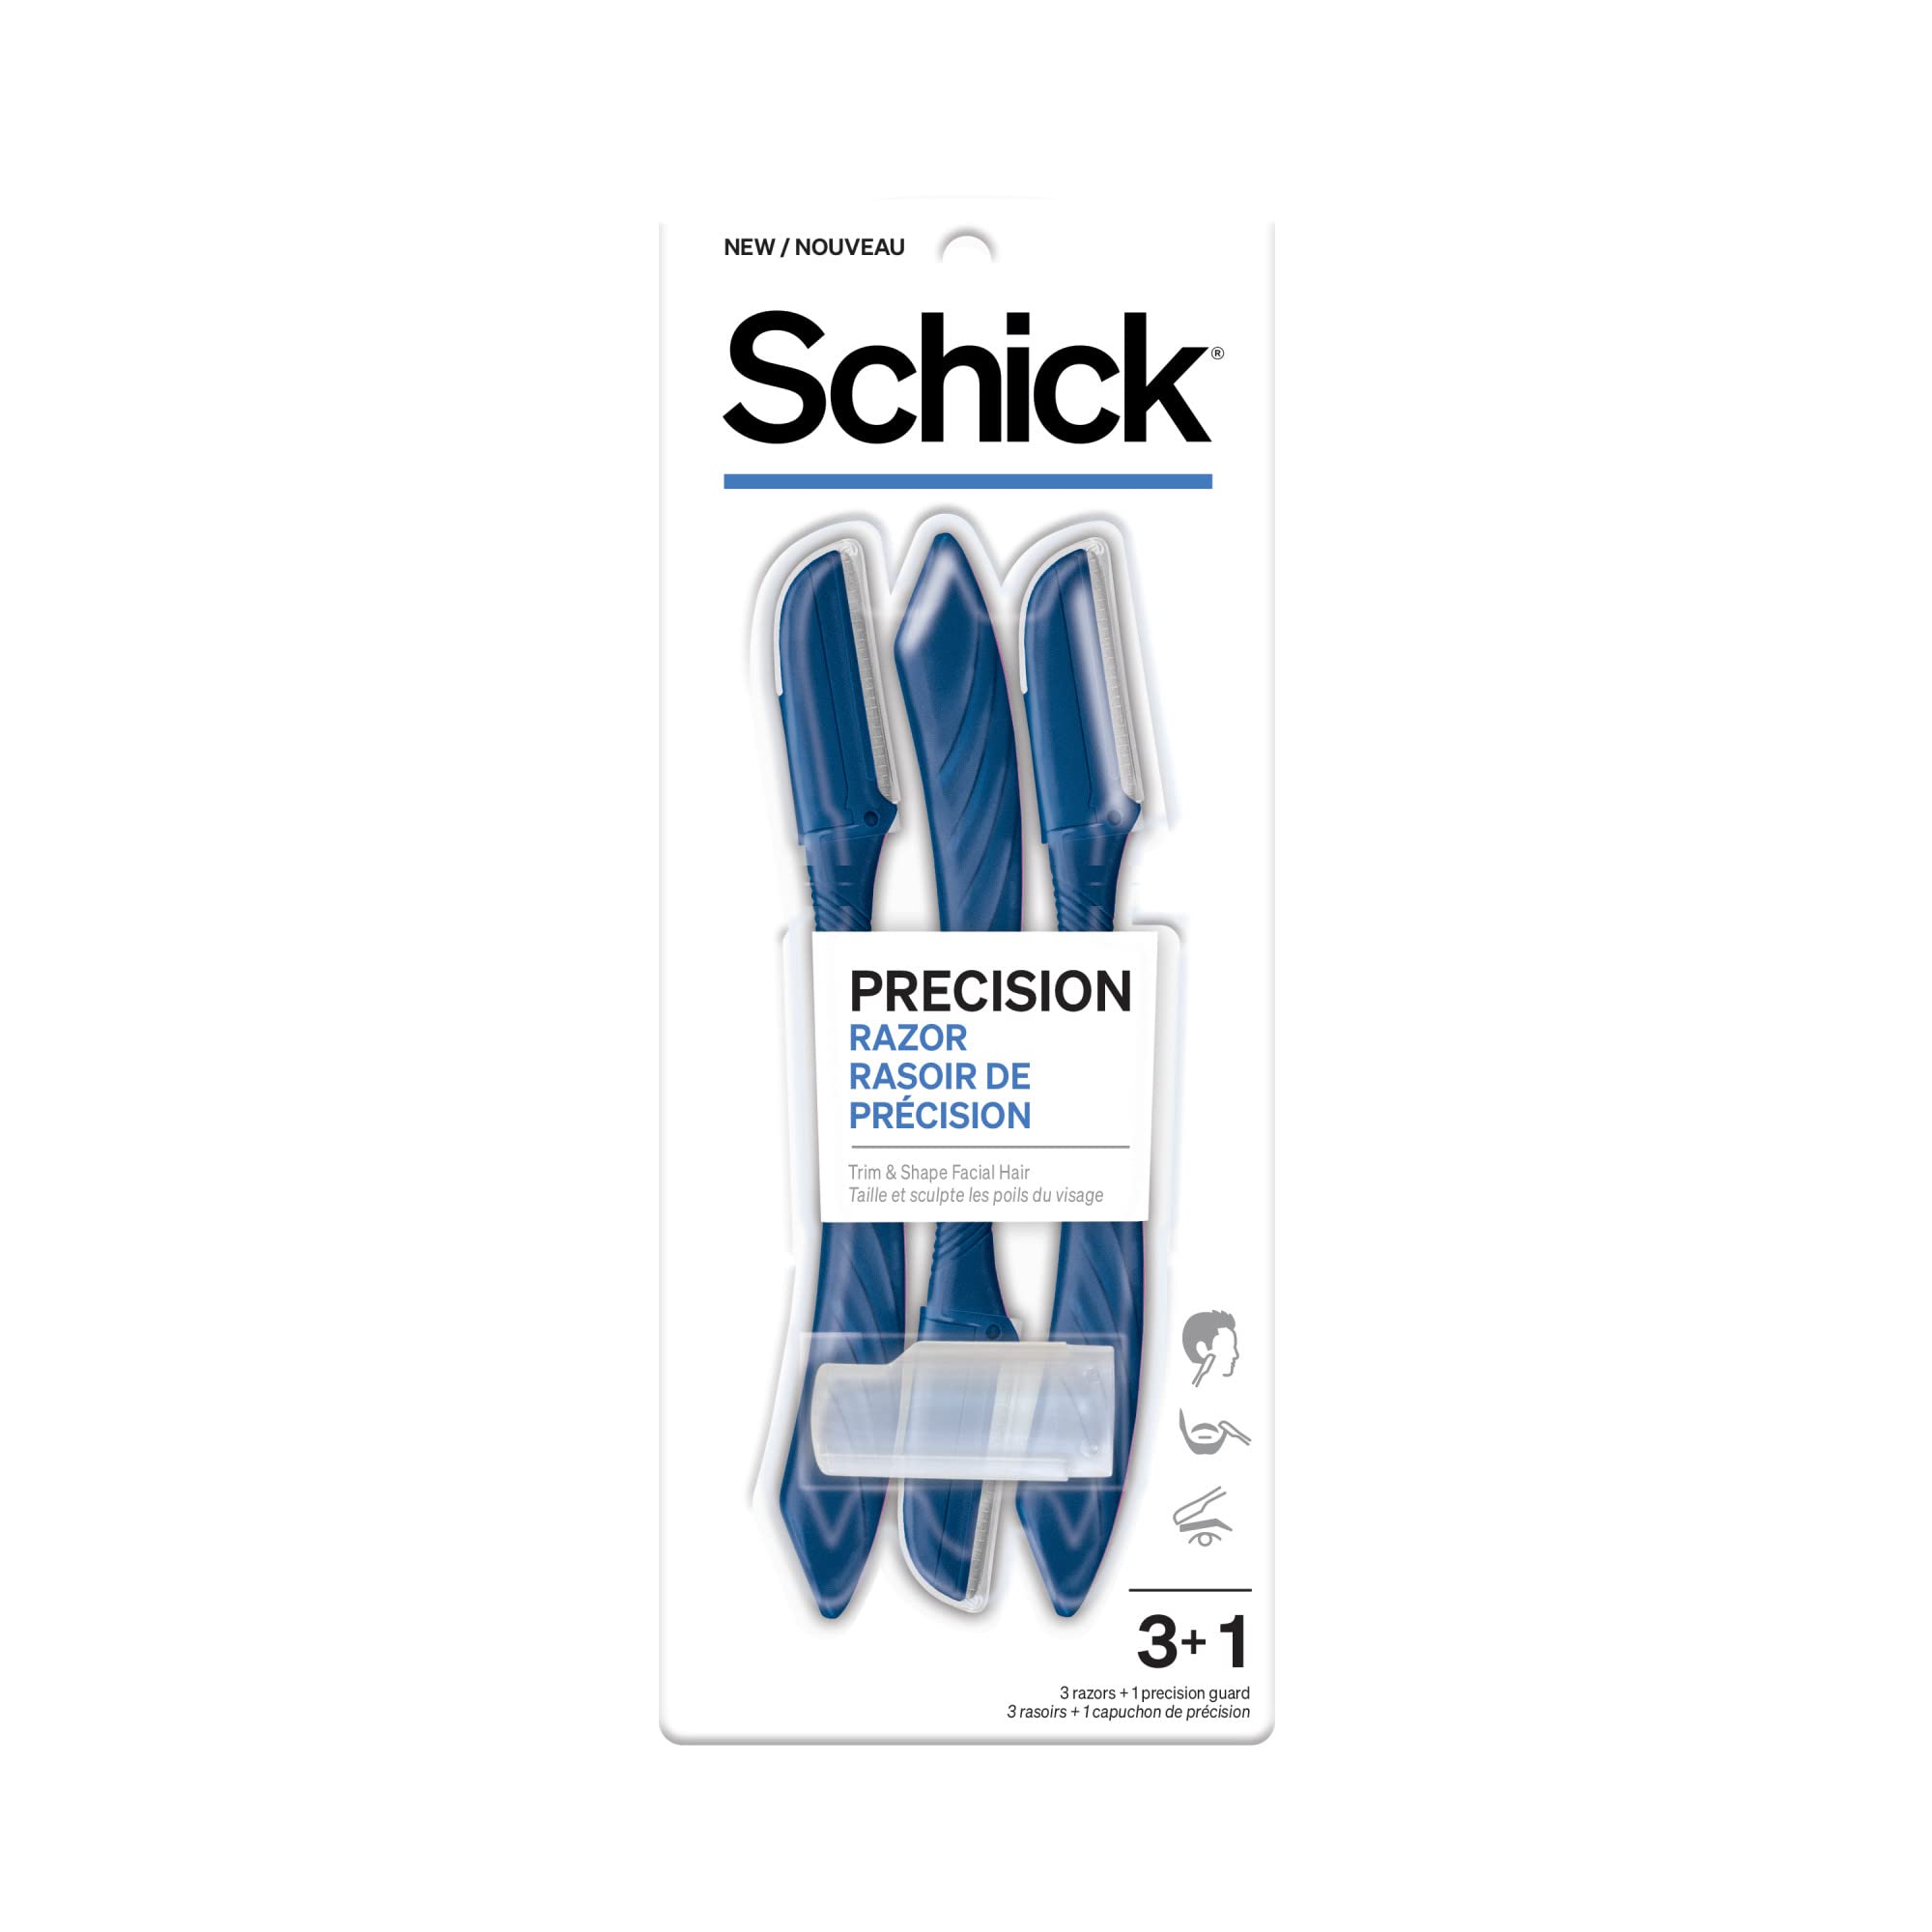 Schick Precision Razor — Precision Razor for Men, Edging Razors, Disposable Razors Men, 3 Count (Pack of 1)